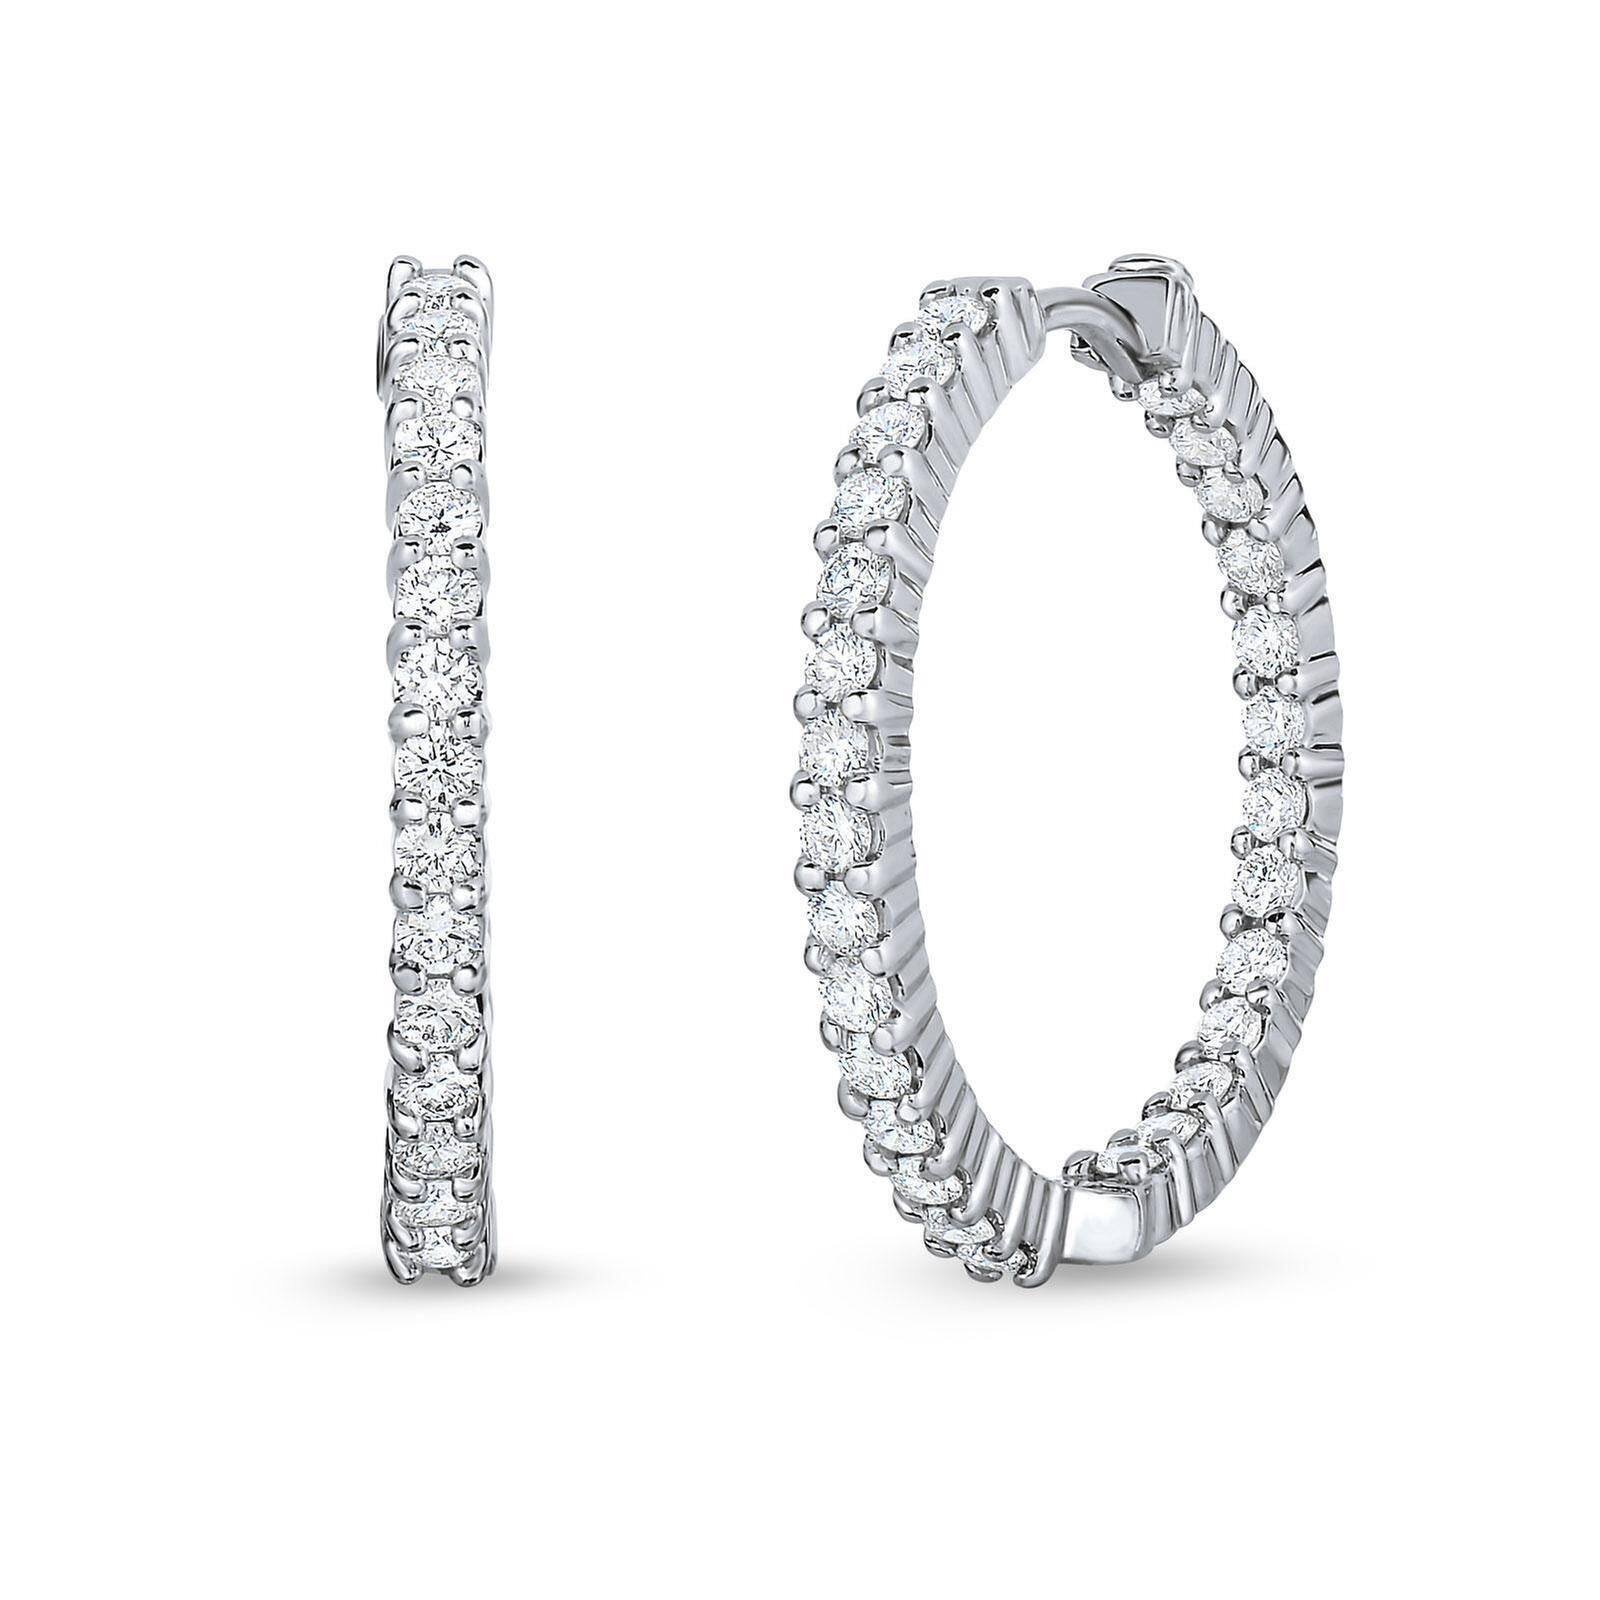 Perfect Diamond Hoops Small Inside-Outside Hoop Earrings 18K Gold with Diamonds